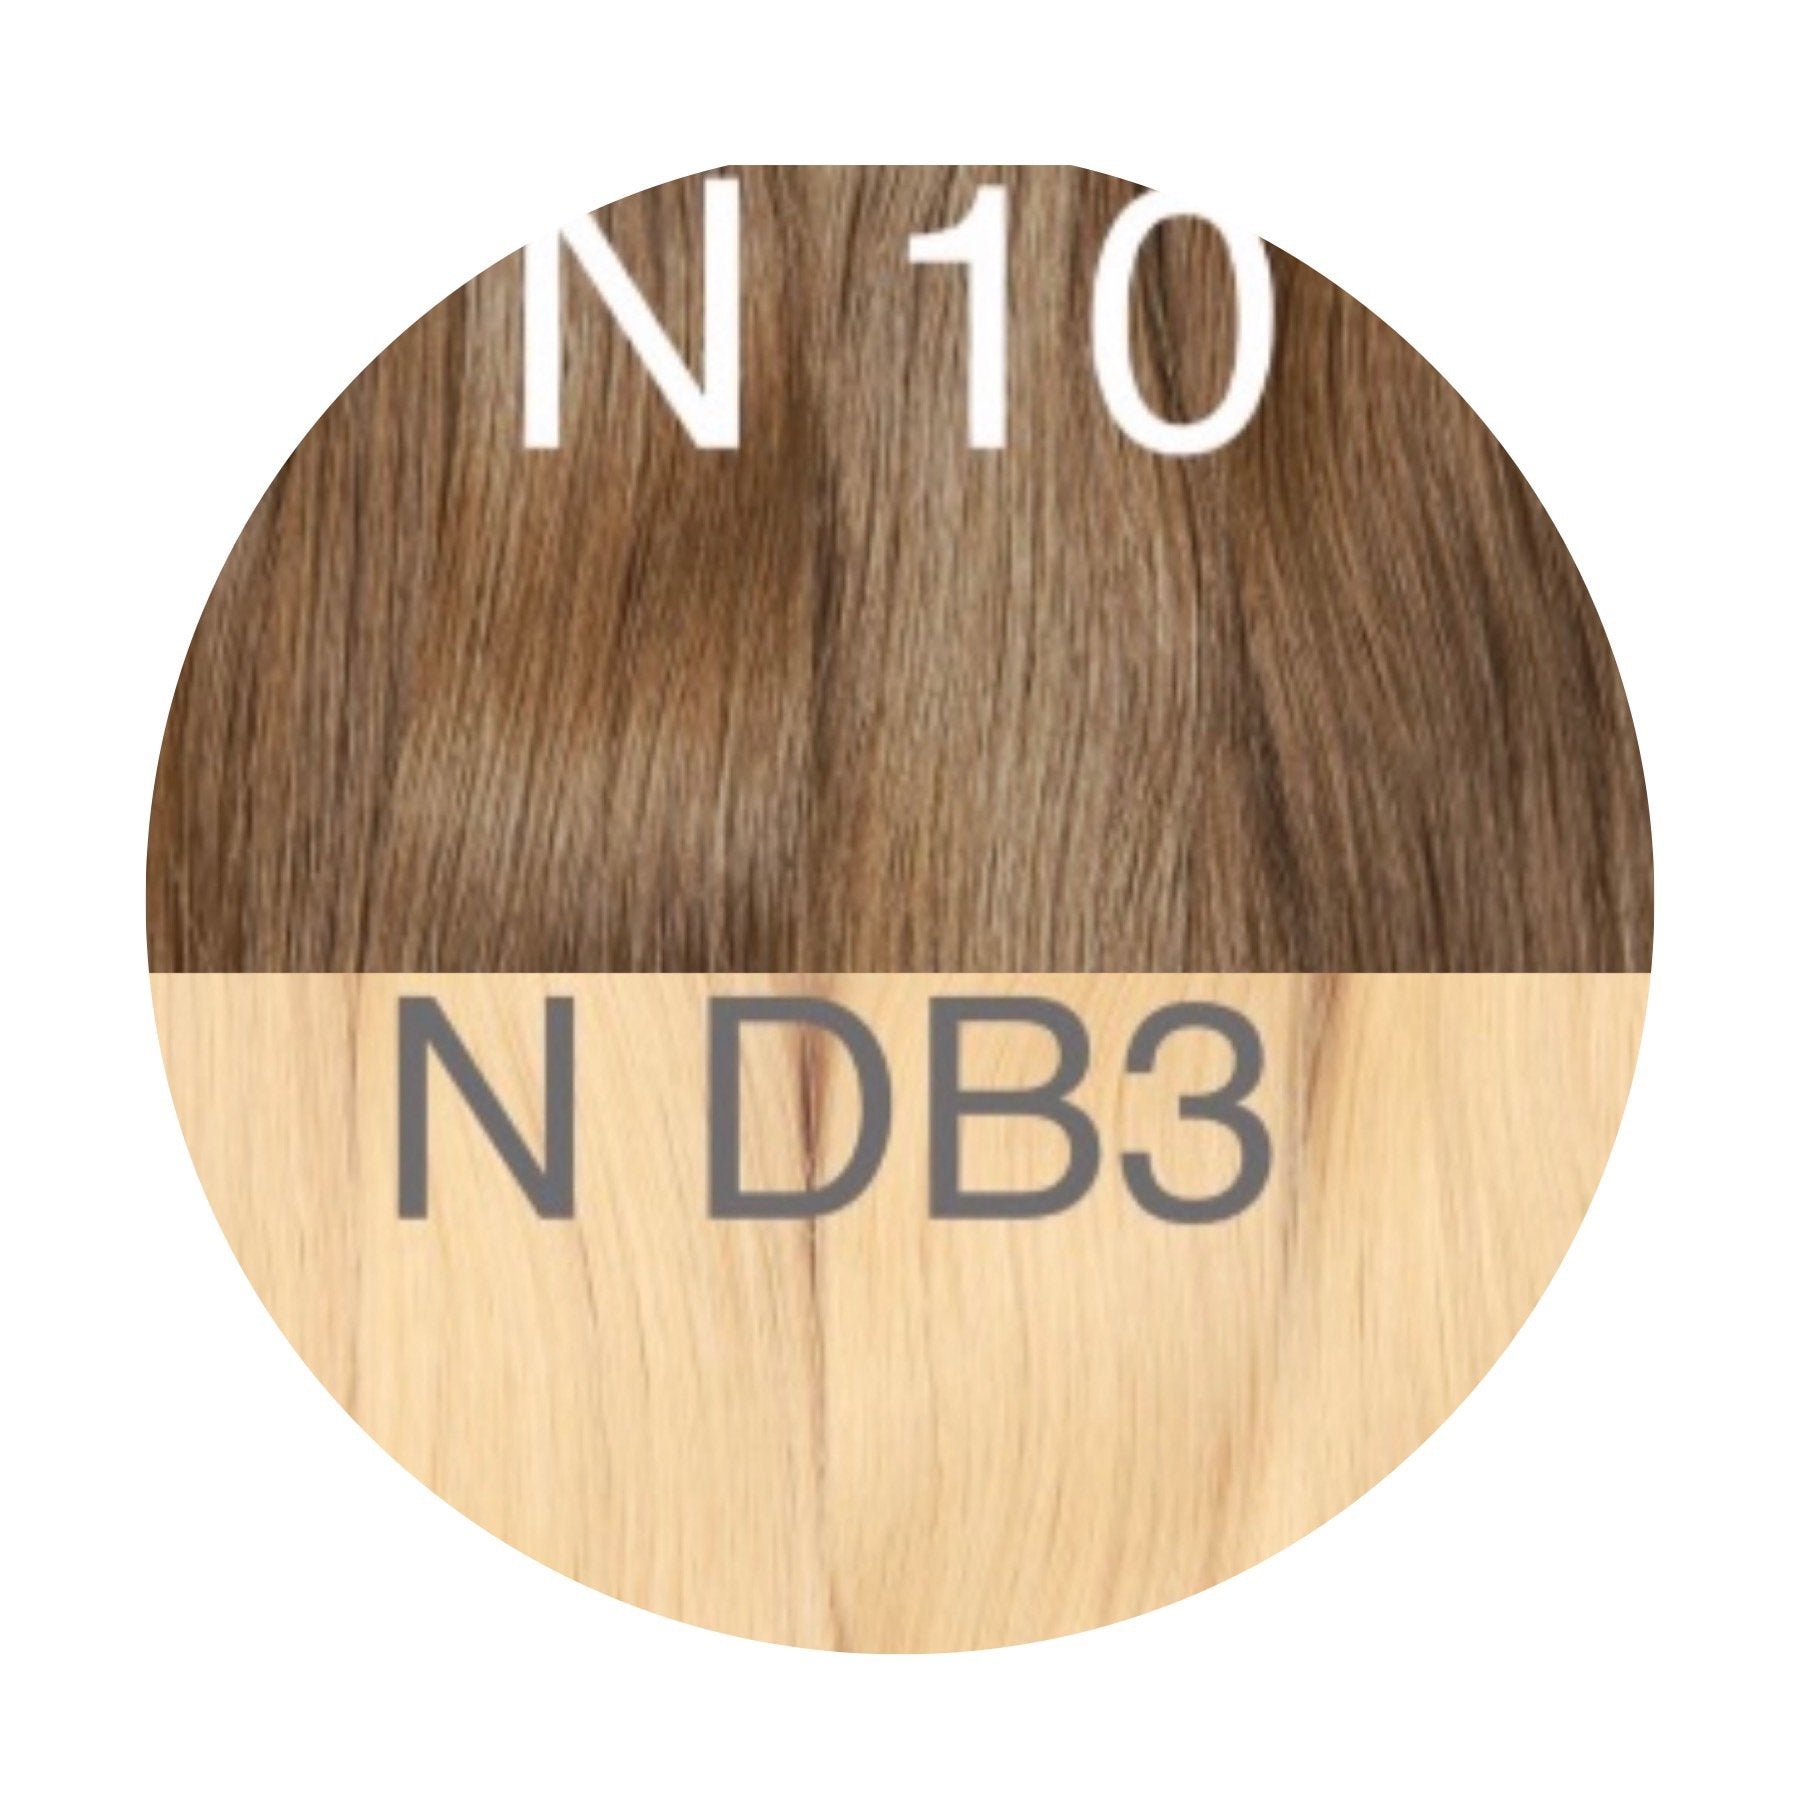 Hot Fusion ombre 10 and DB3 Color GVA hair_Retail price - GVA hair